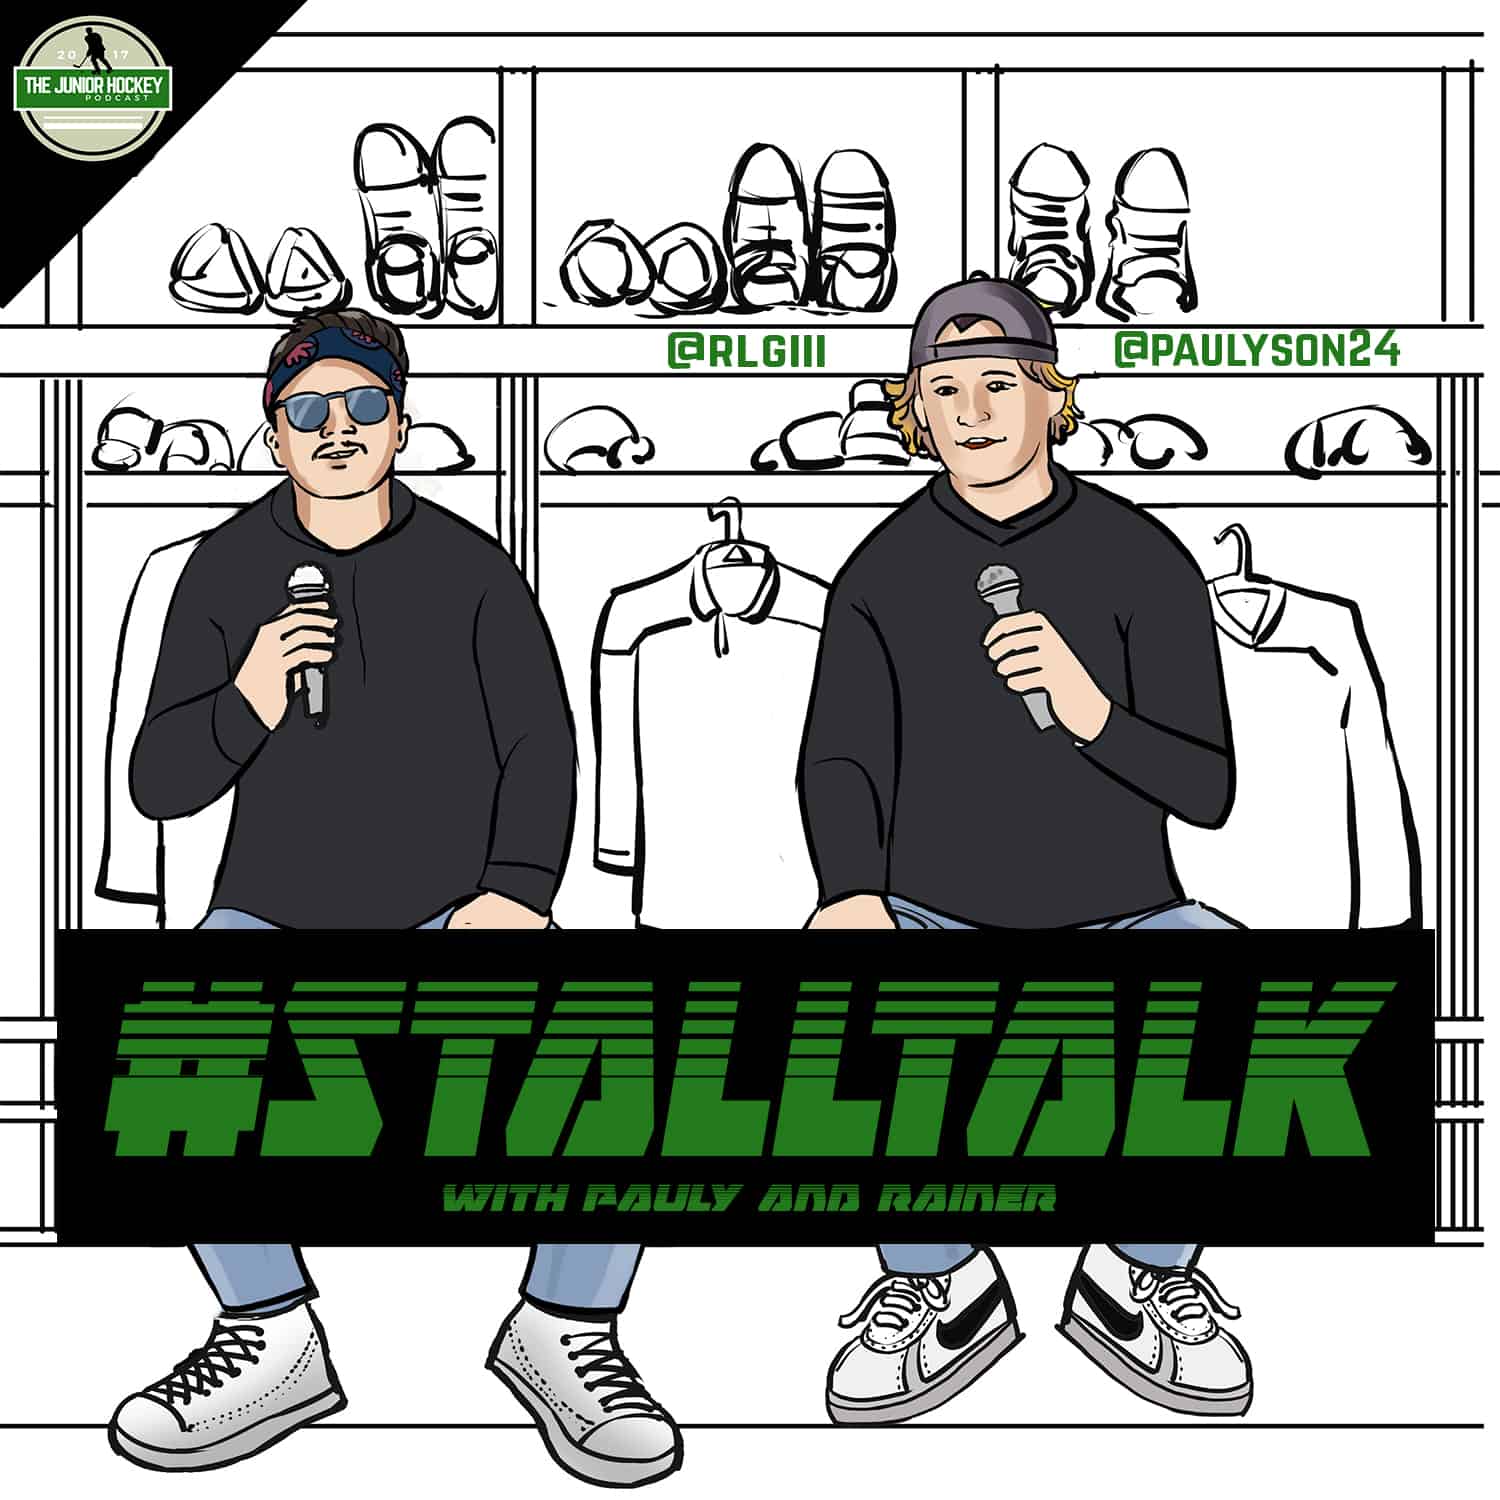 Stall talk hockey podcast